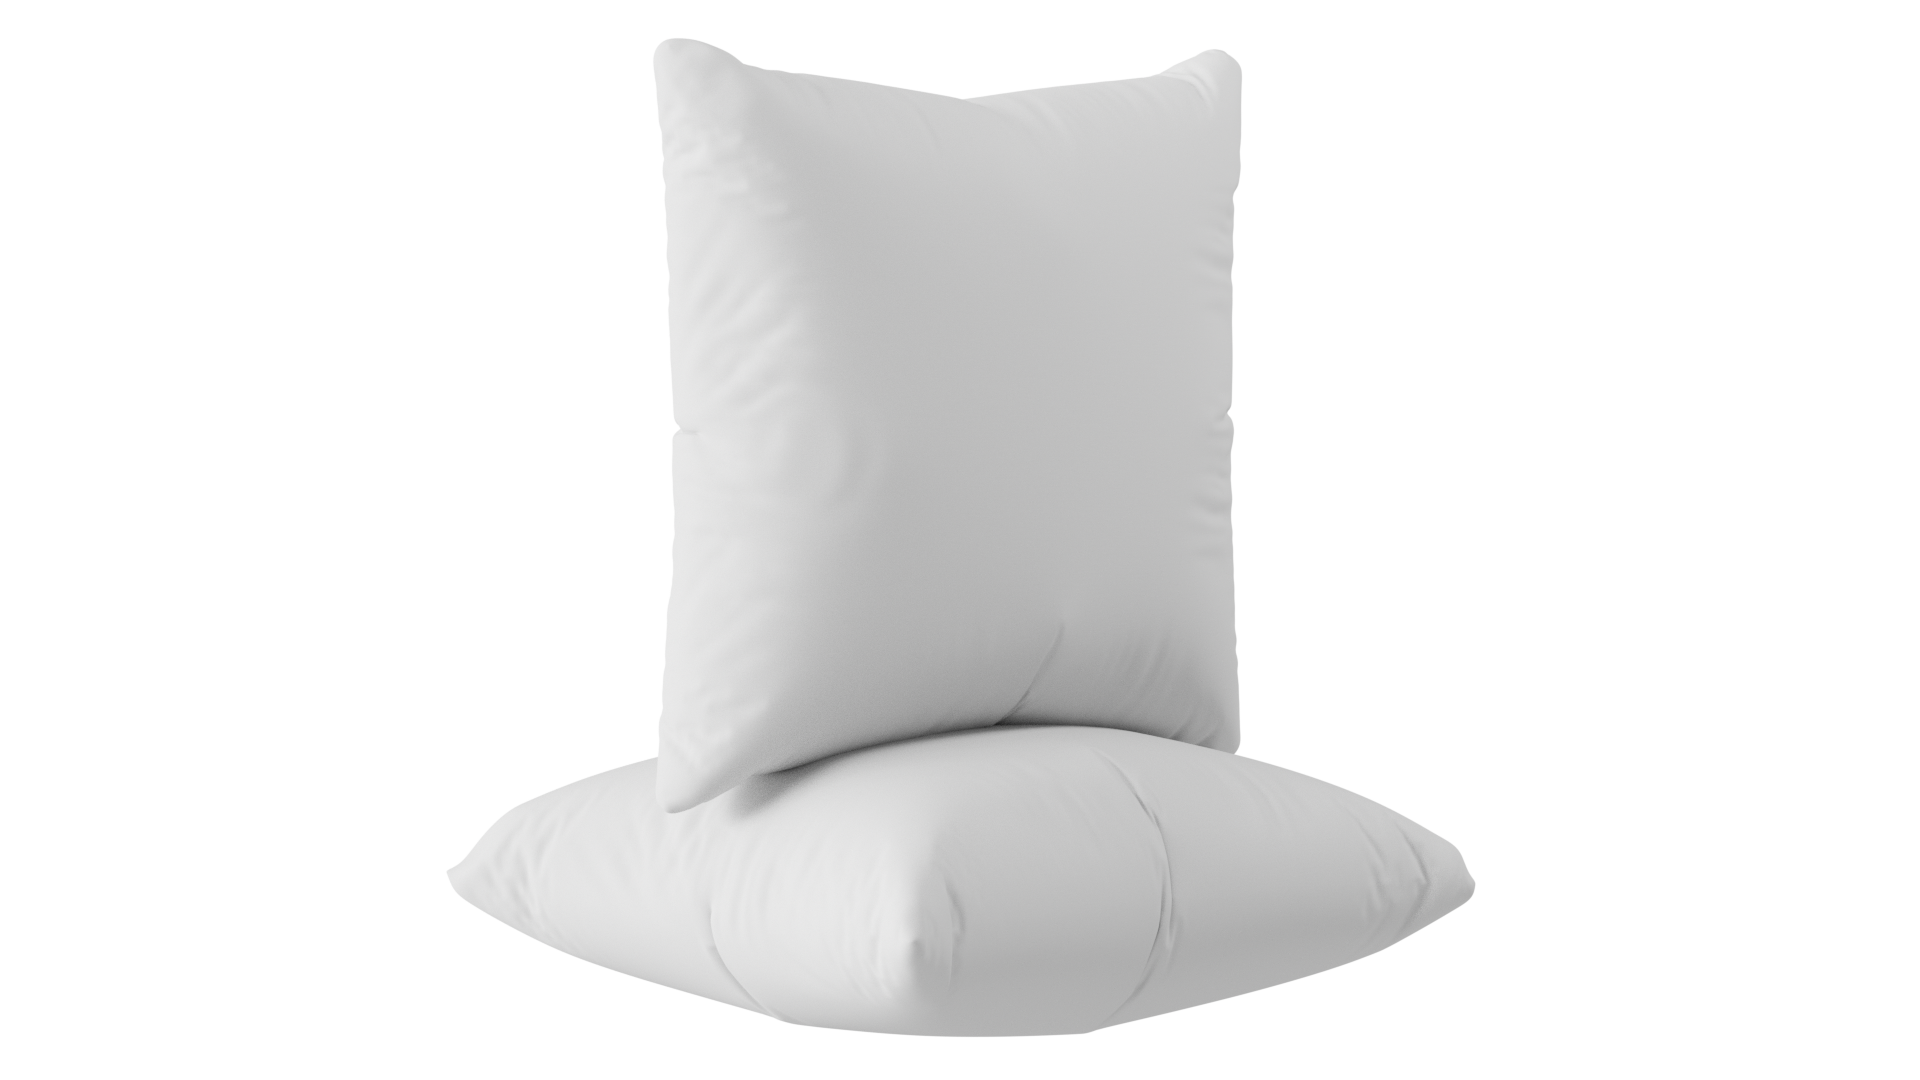 Utopia Bedding Throw Pillows Insert 4PK with 2PK Pillow Protector 18x18  Inches (White)